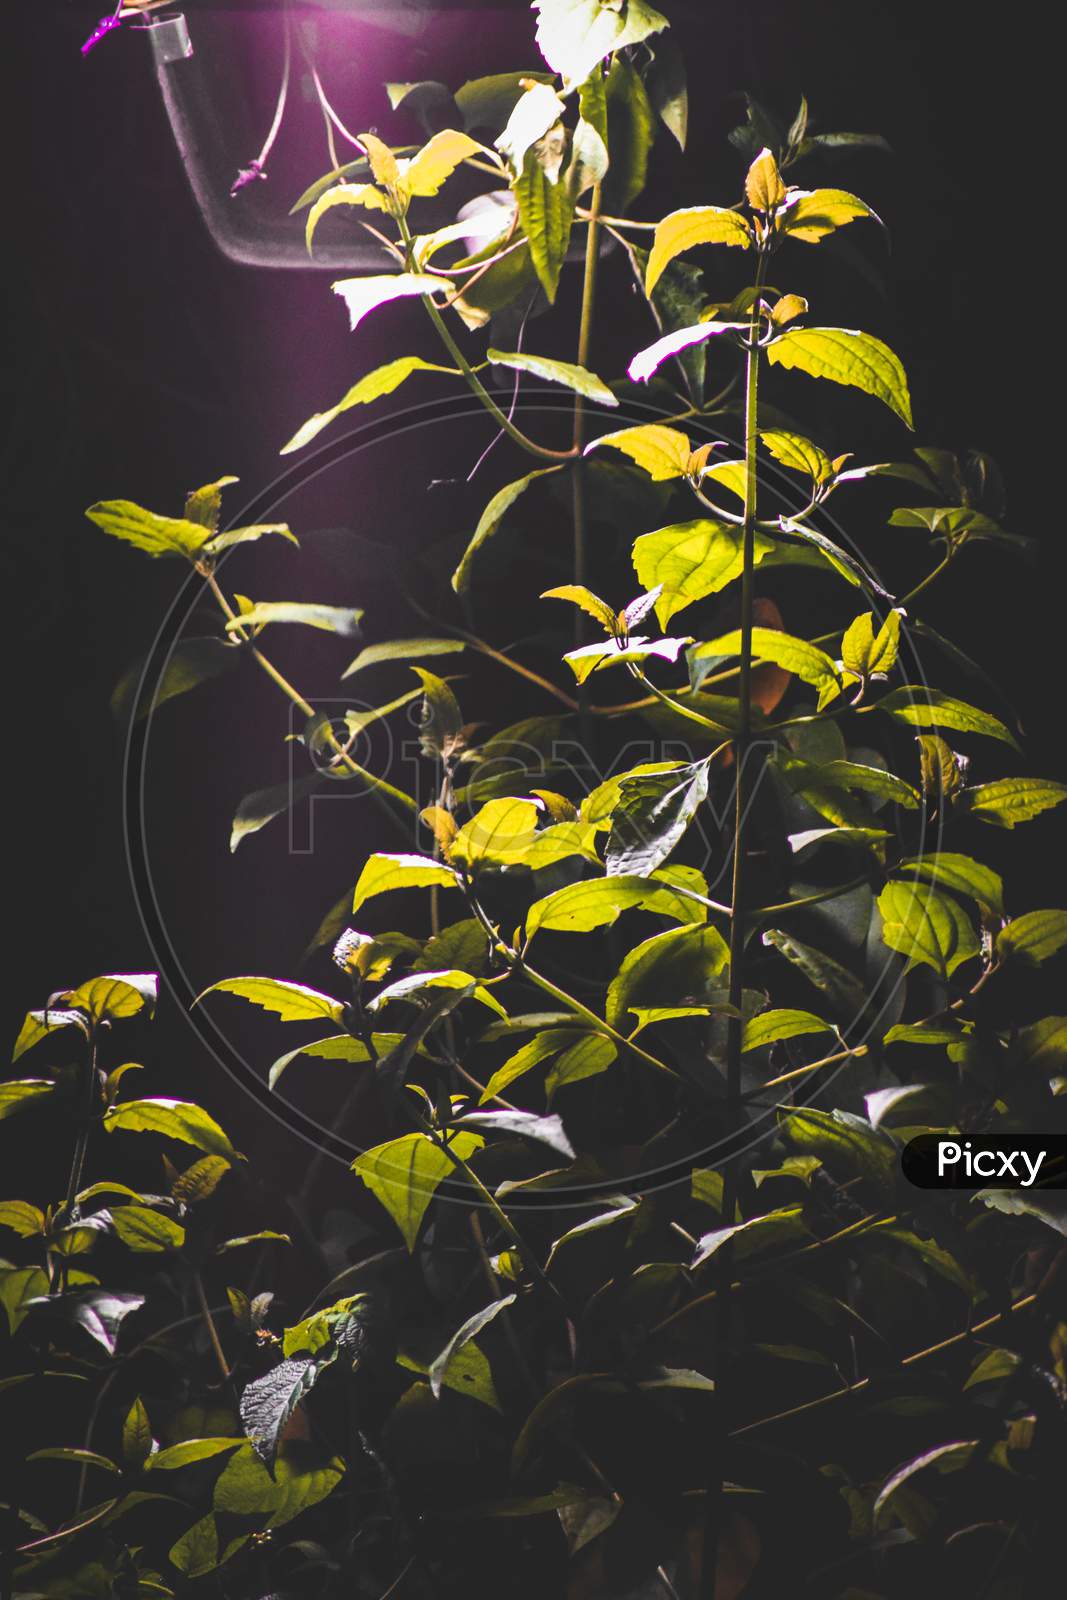 Plant under a Street Light - Night Photography